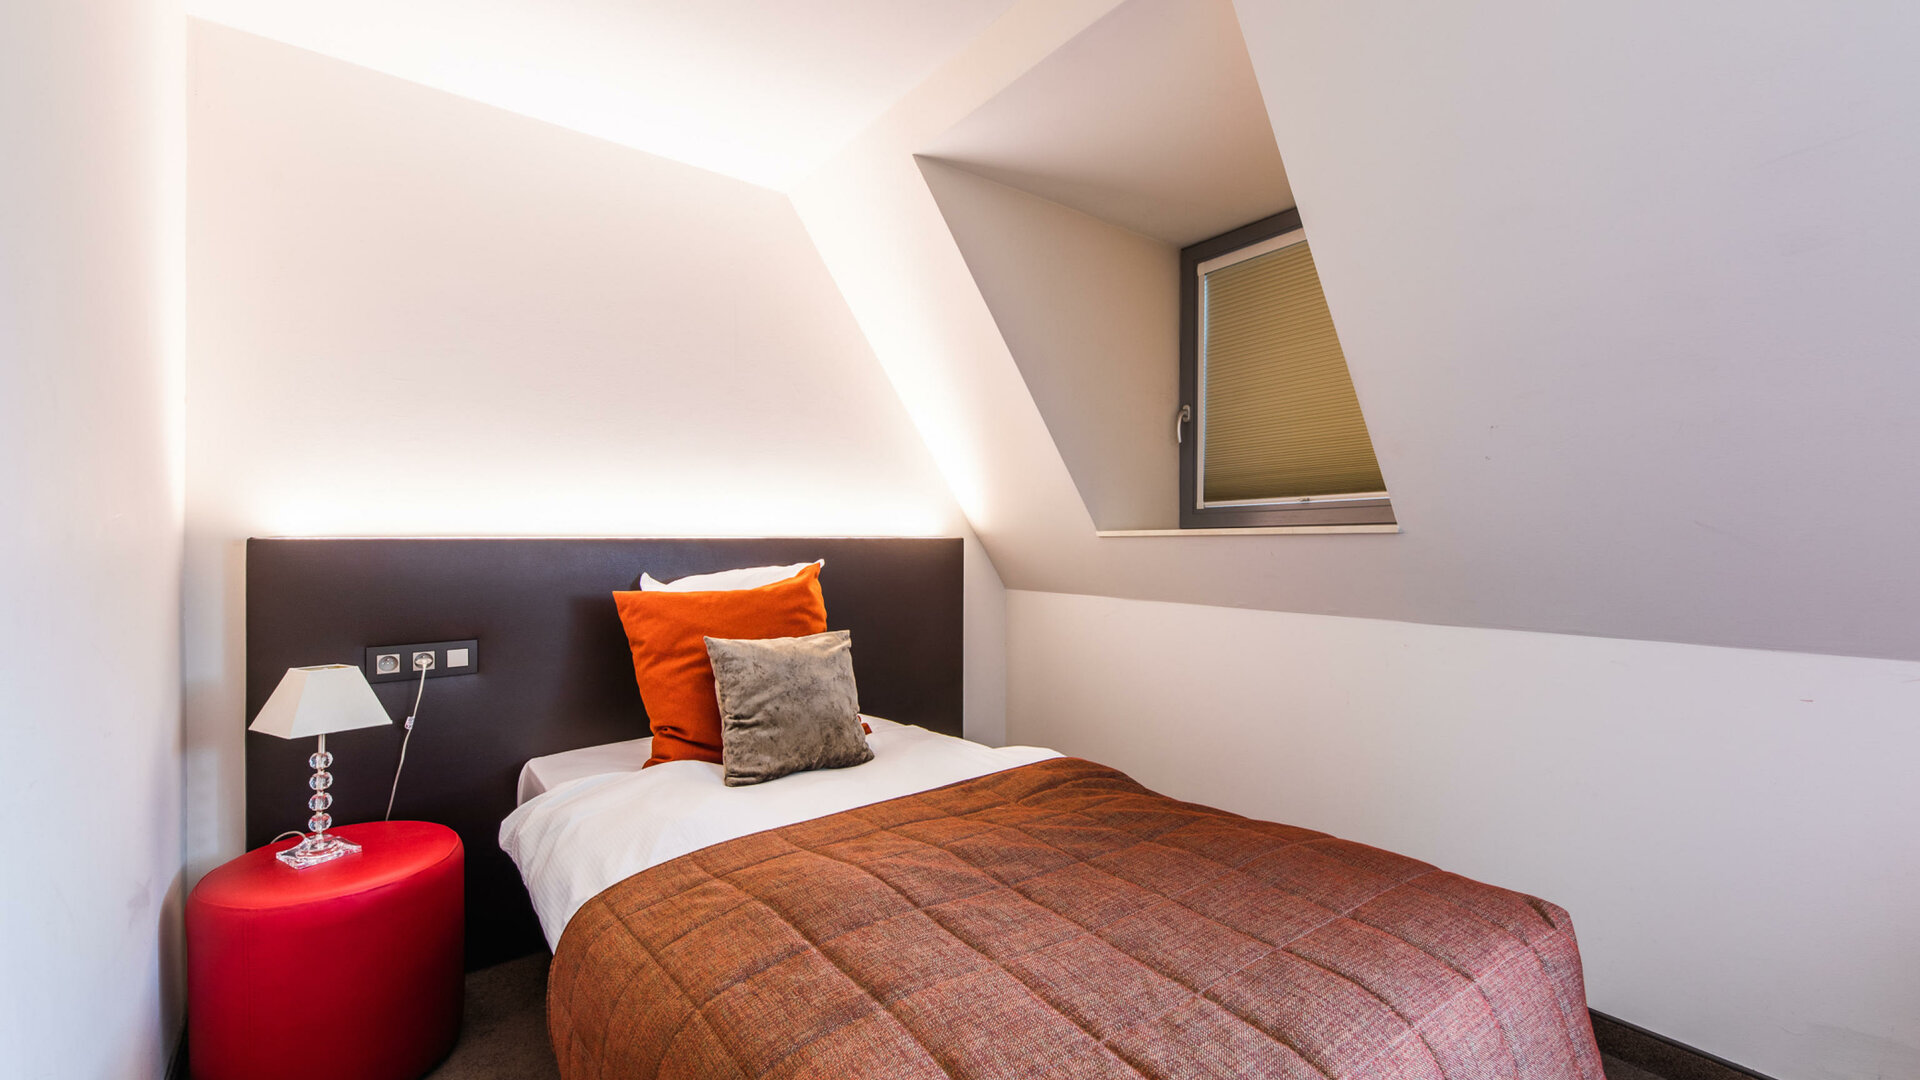 Hotel Malpertuus Riemst - Standard single room